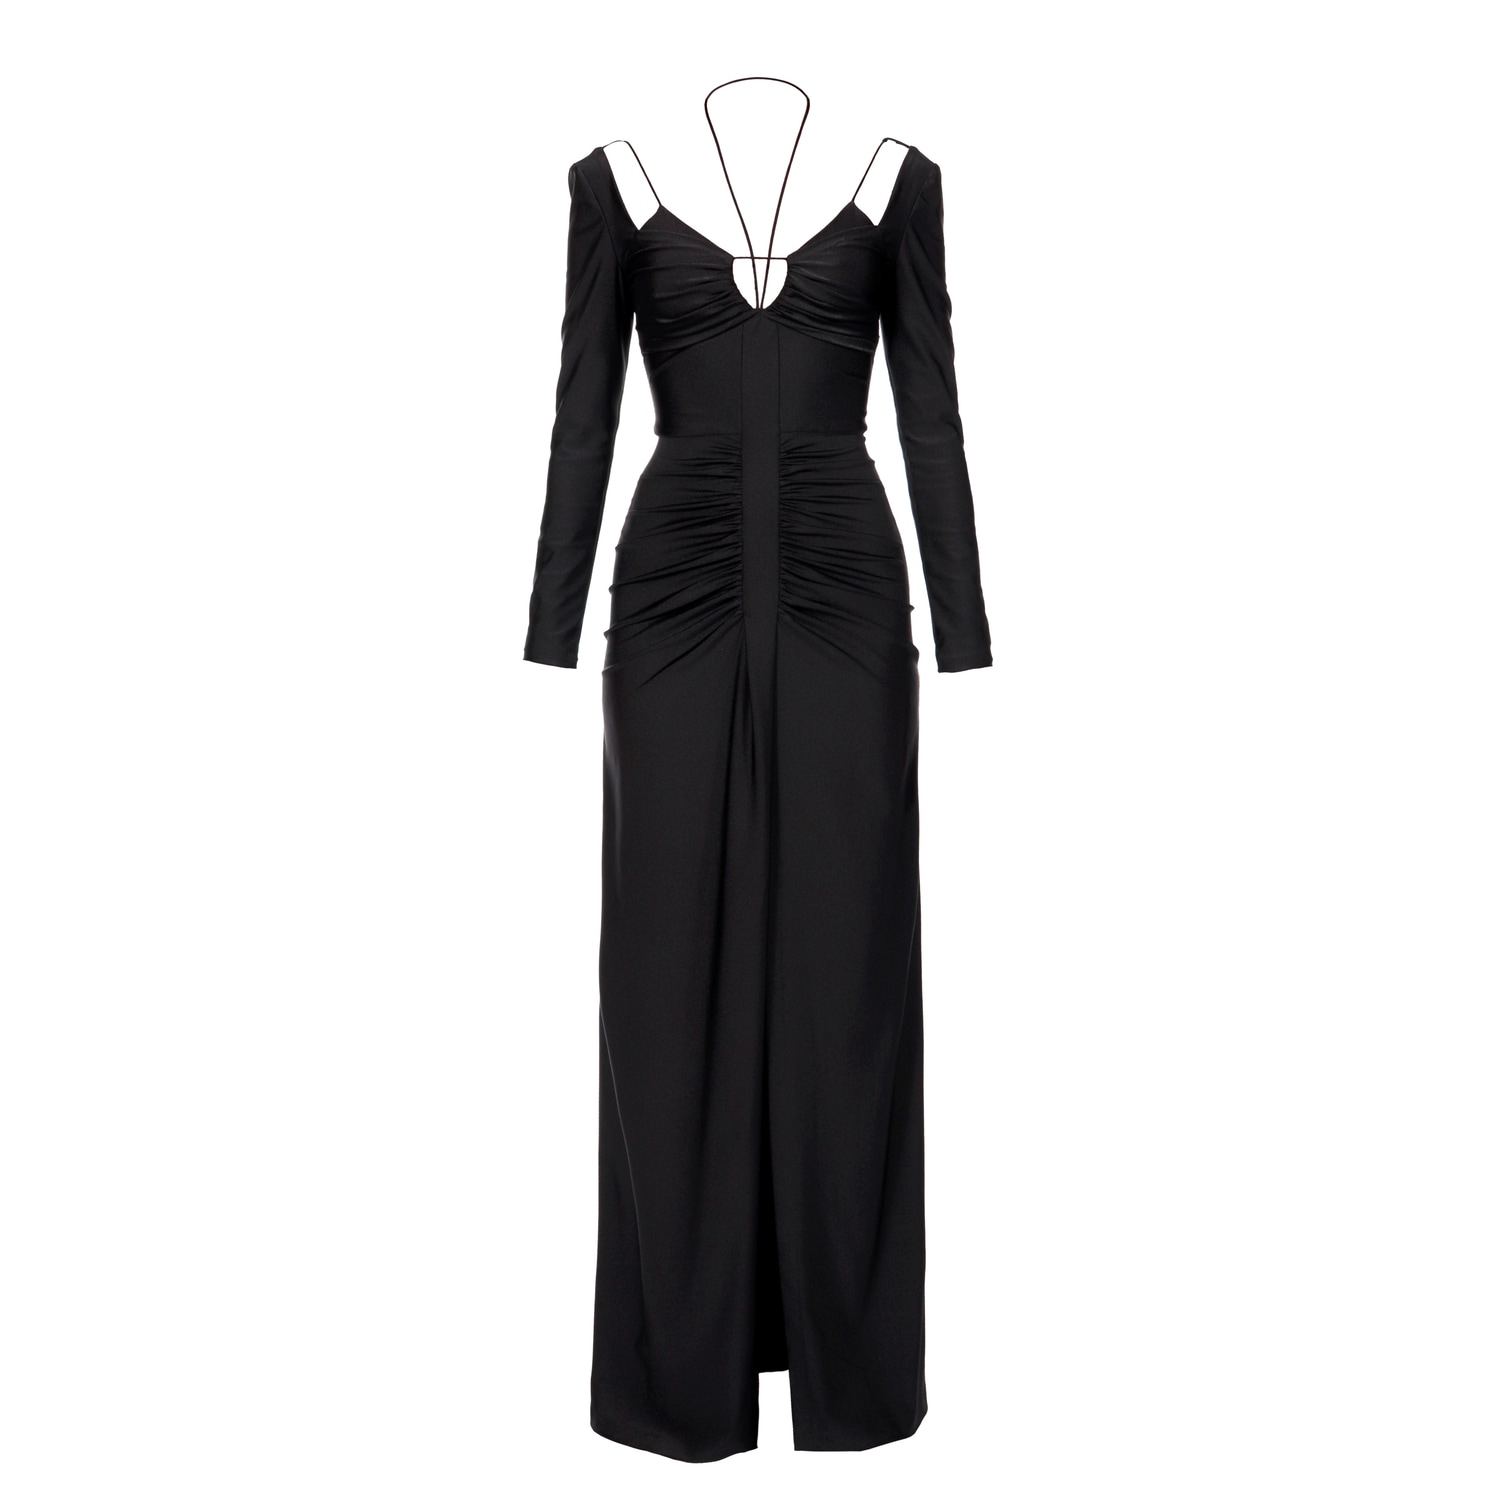 Shop Aggi Women's Dianna Maxi Black Maxi Evening Dress